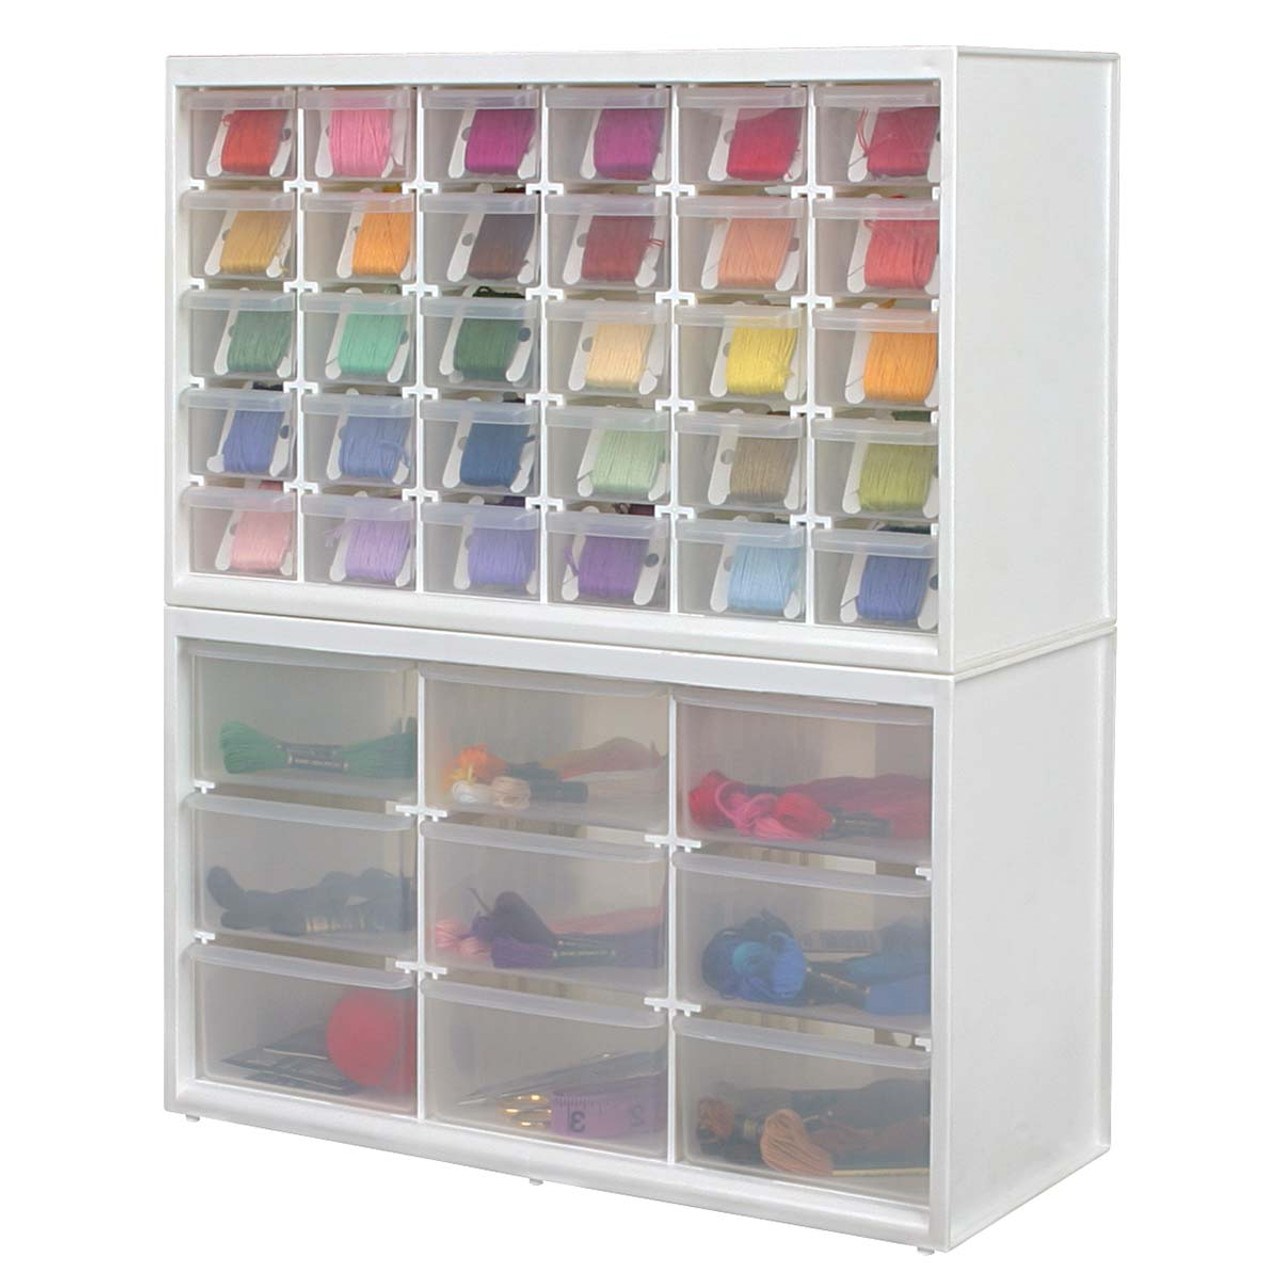 Artbin Store-In-Drawer Cabinet, Translucent, White